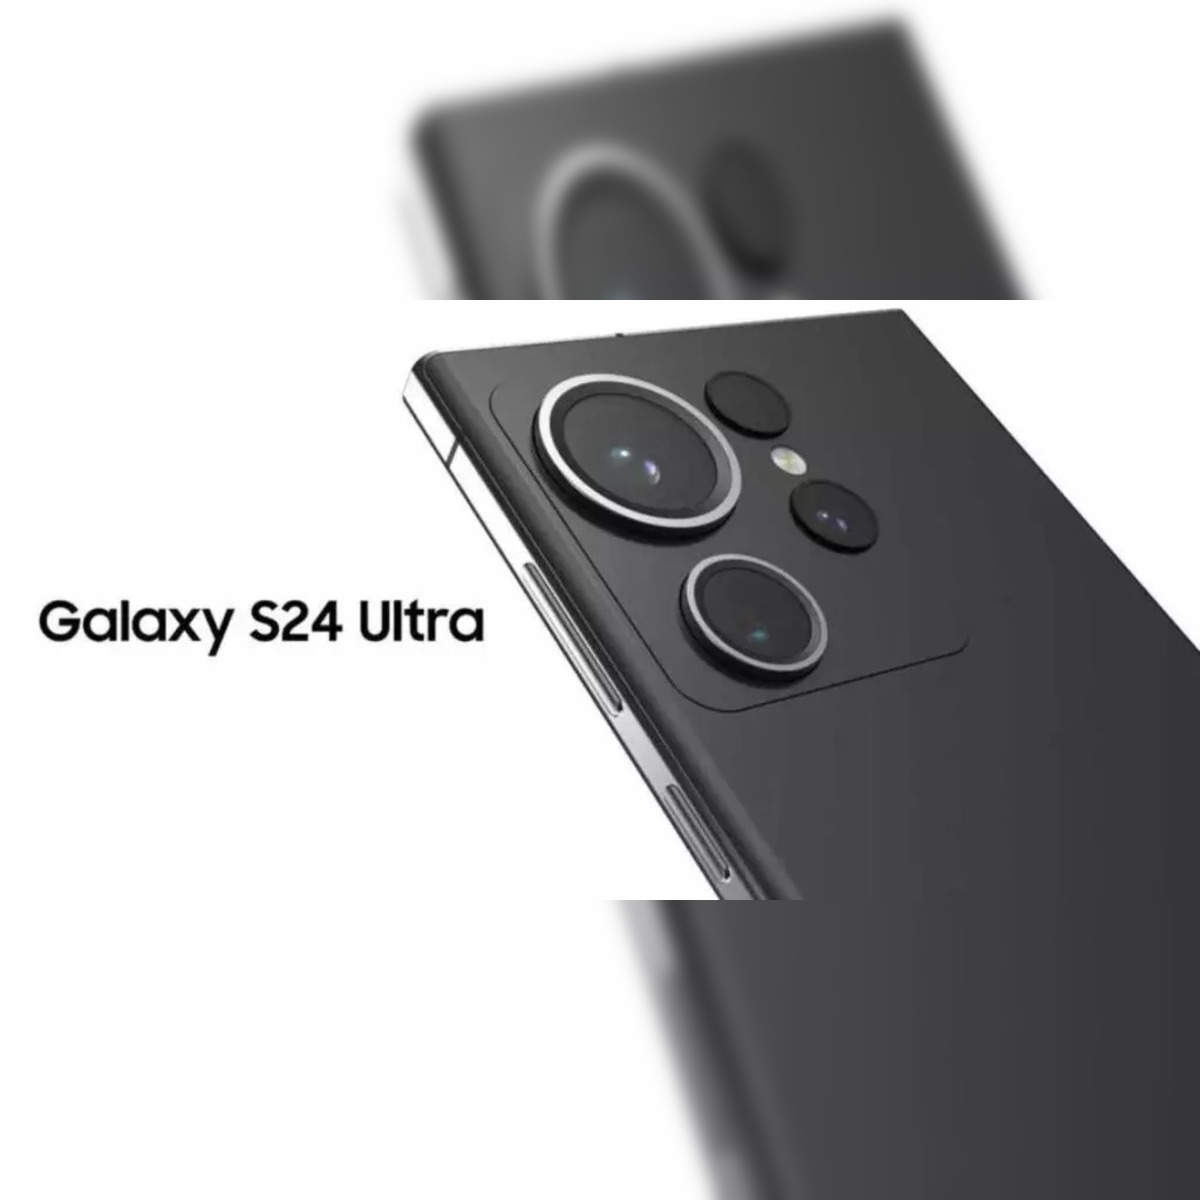 Samsung Galaxy S24 Ultra - New Camera Upgrades! 